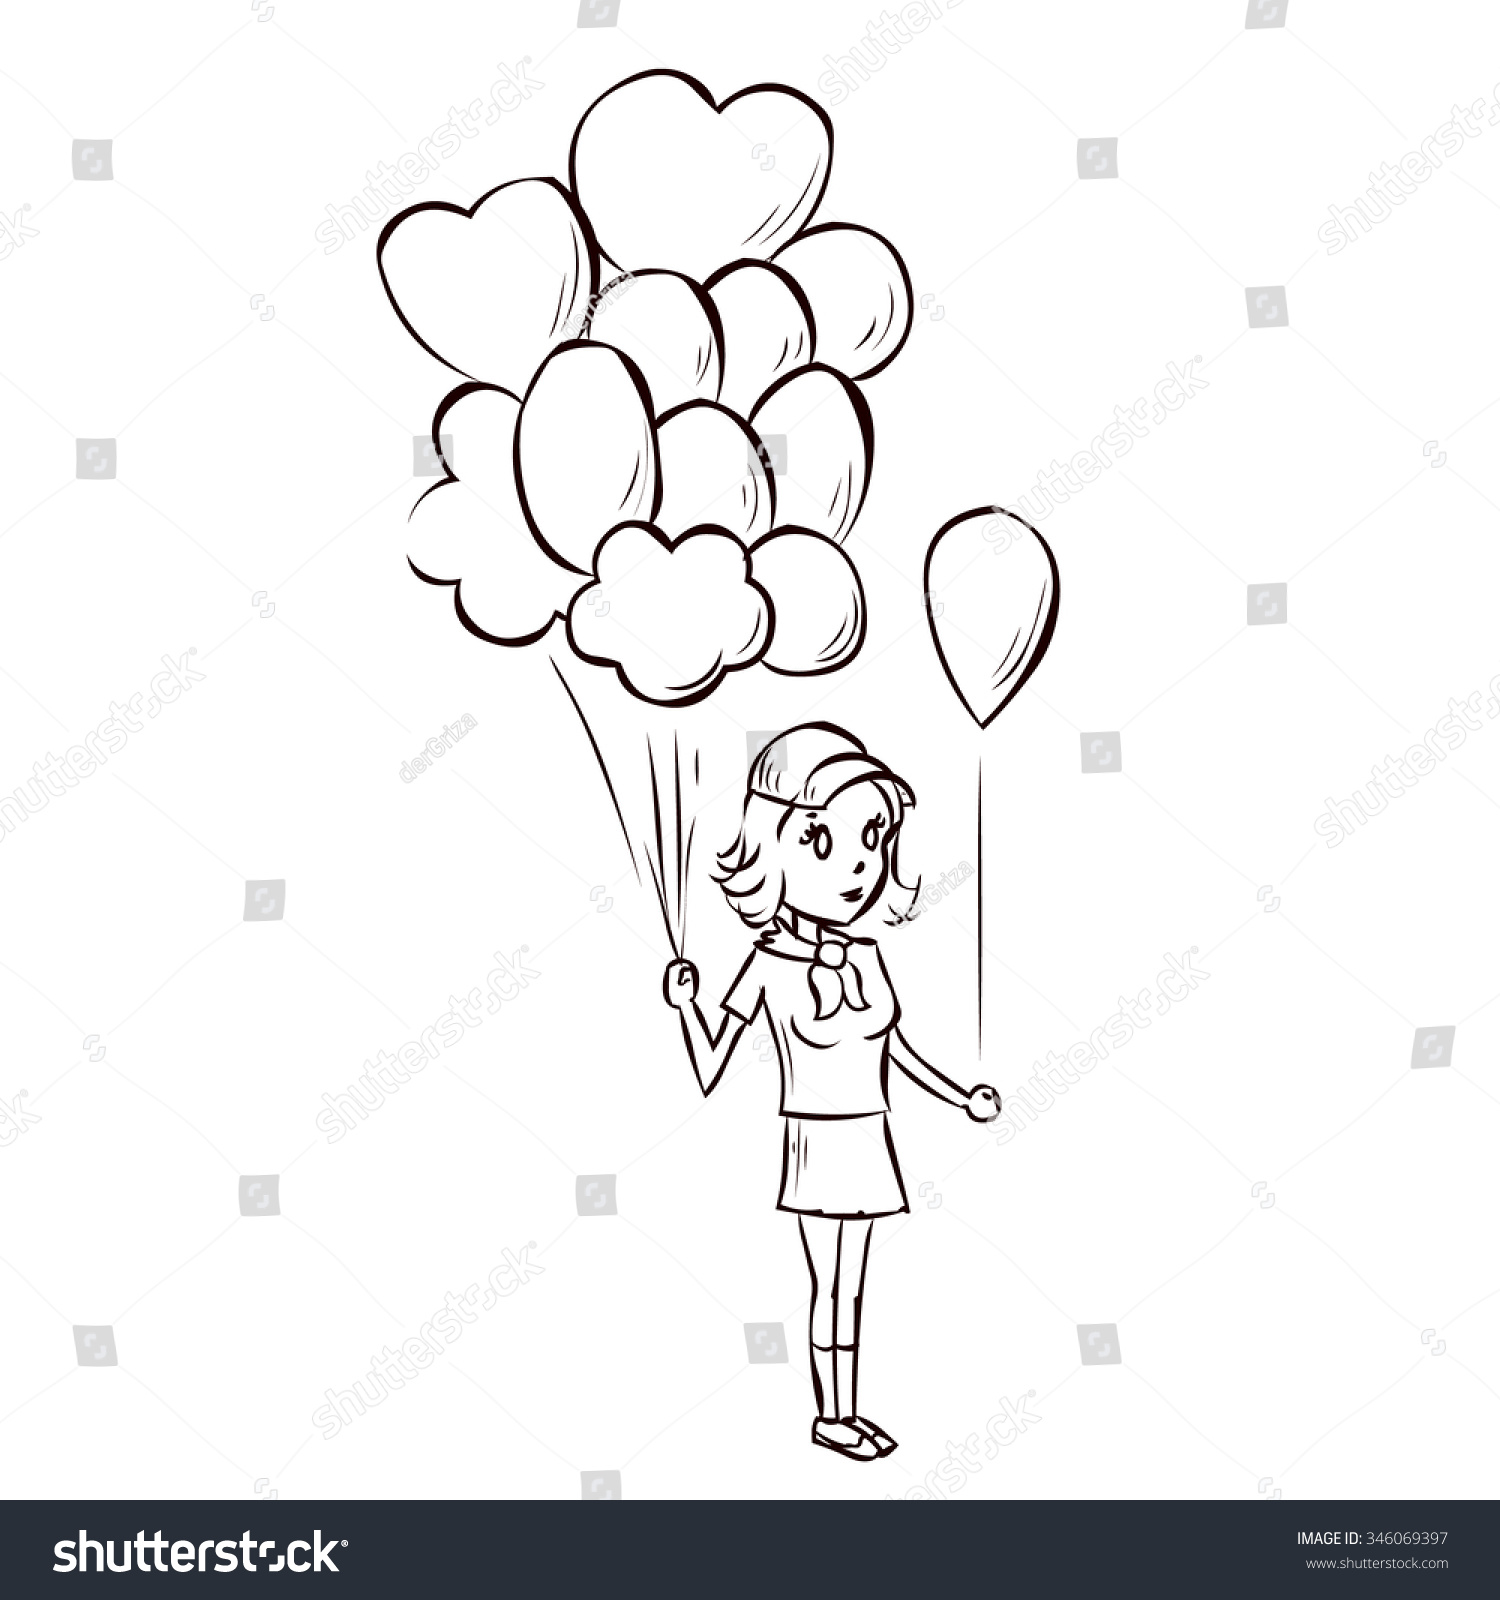 balloon seller clipart